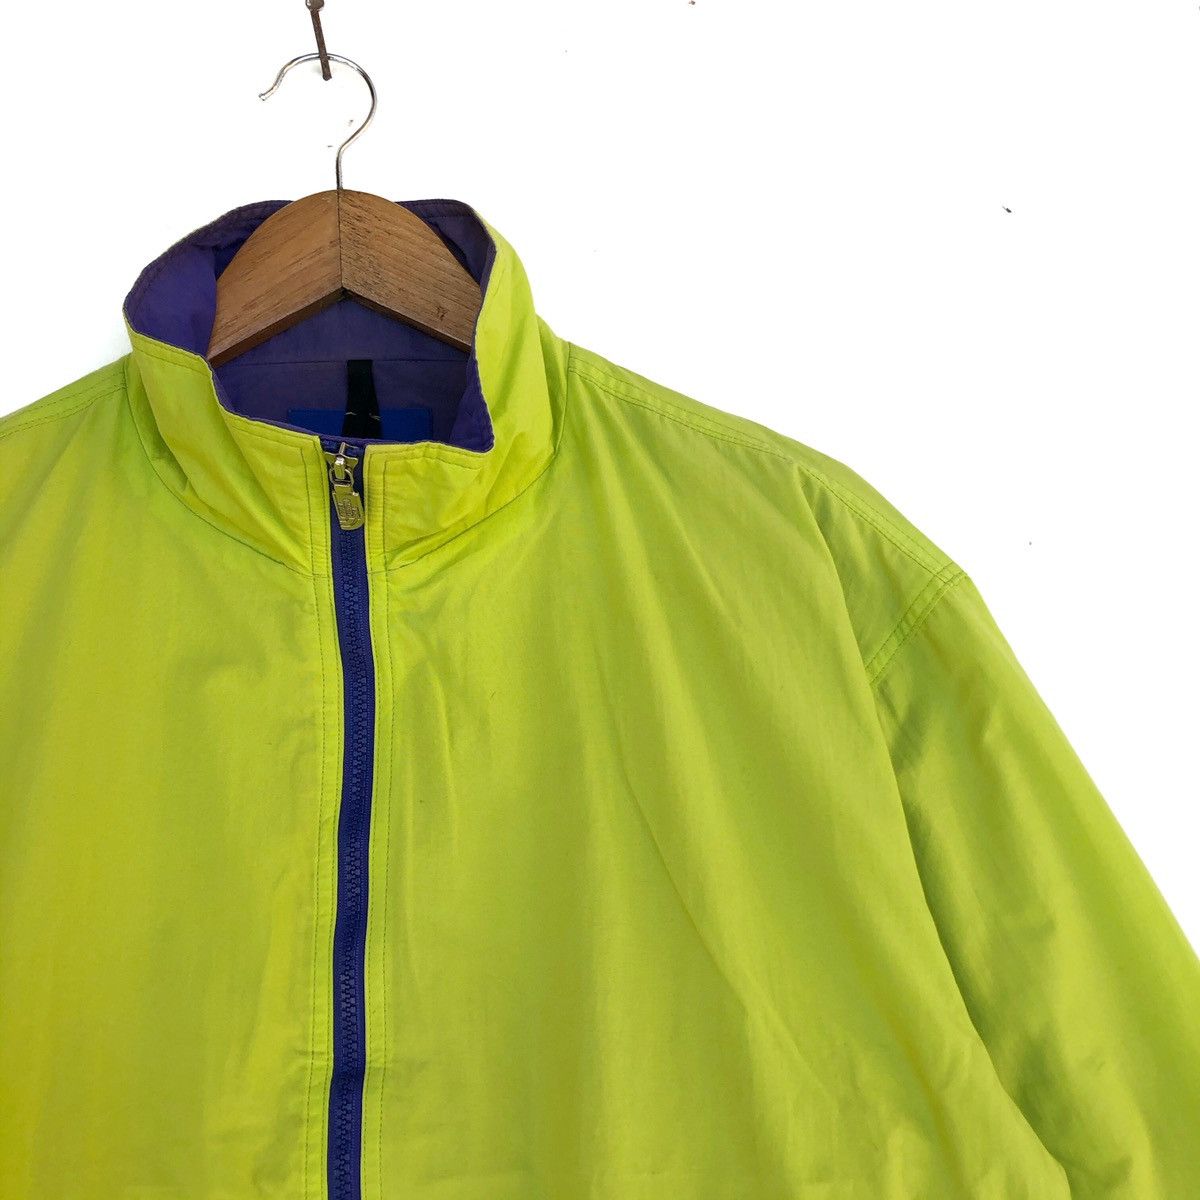 ❄️THE NORTH FACE Neon Green Windbreaker Zip Jacket - 3